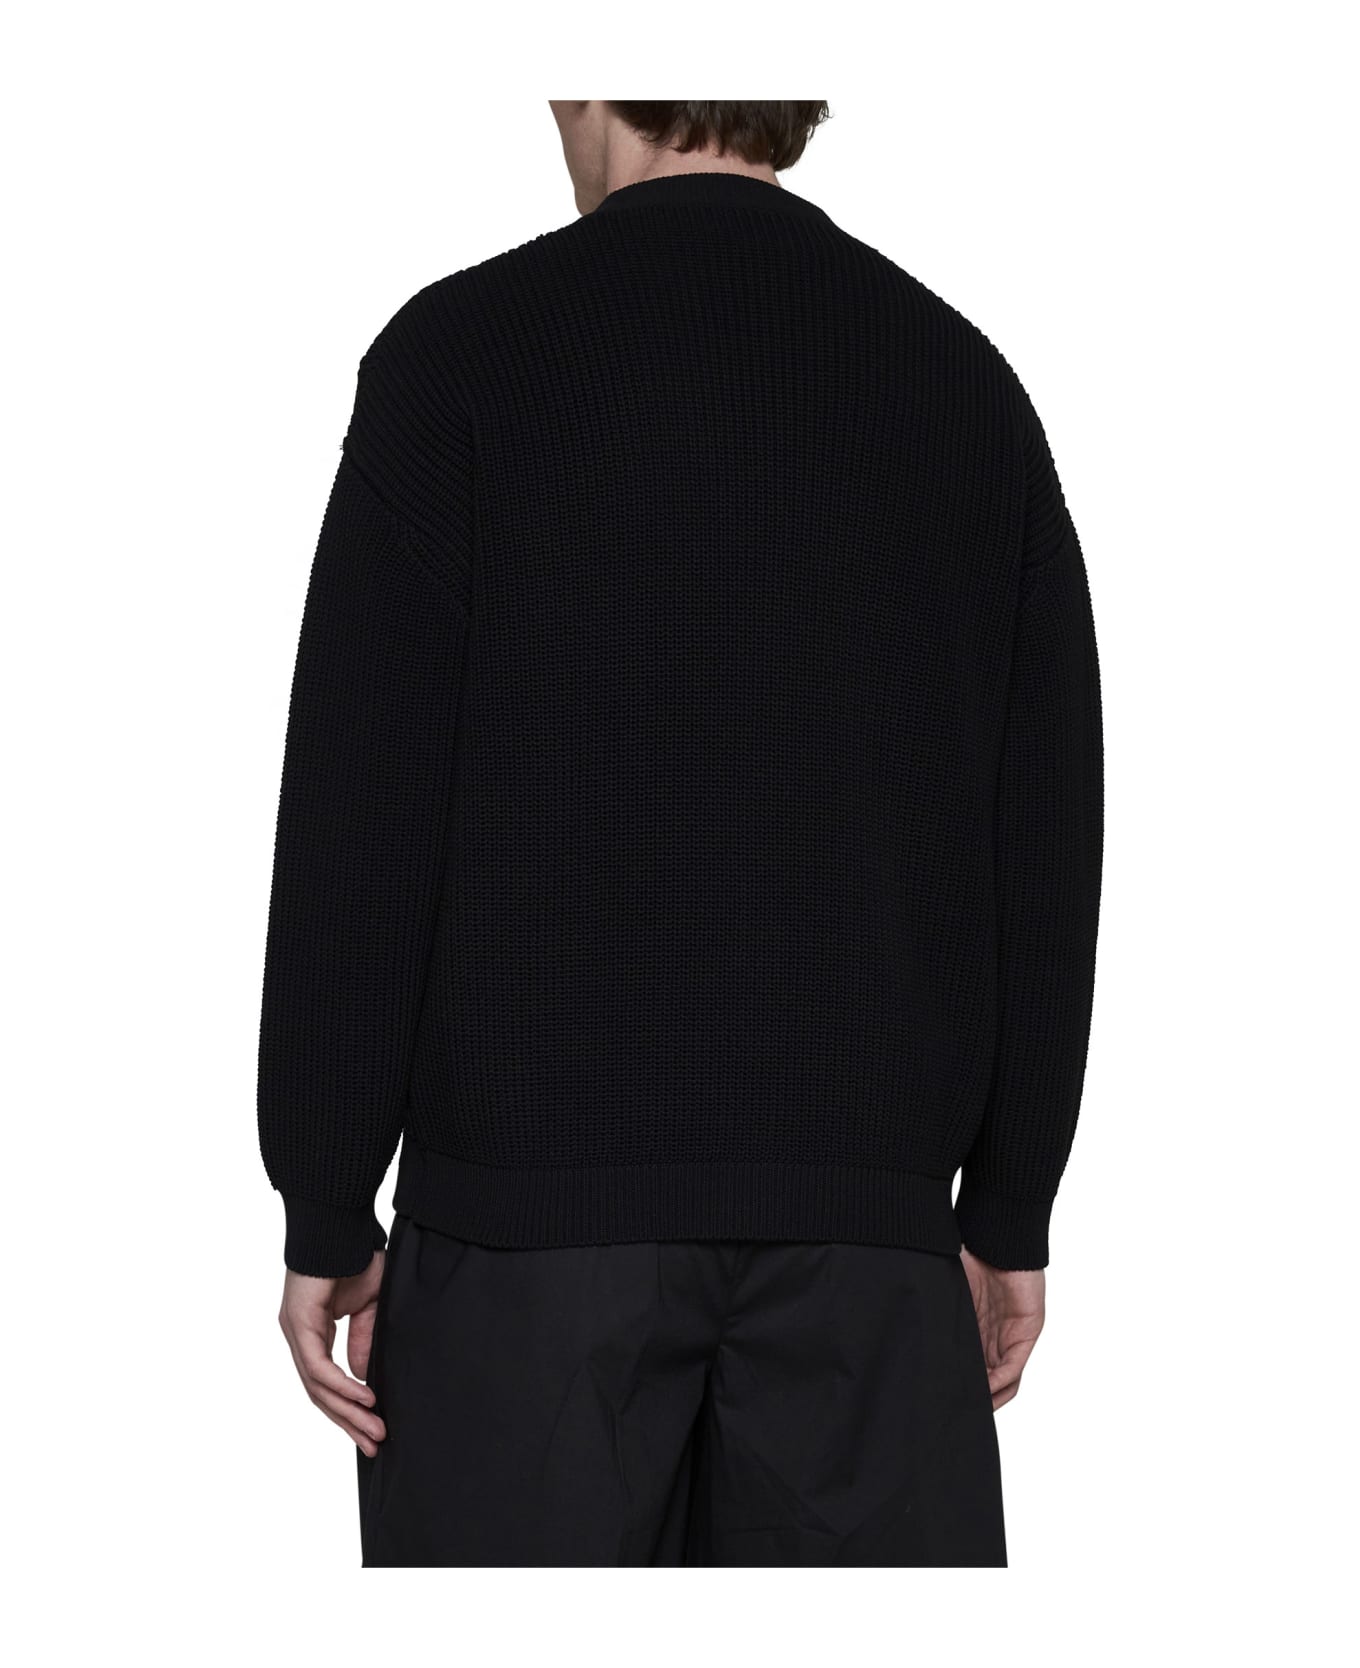 Lardini Sweater - Black